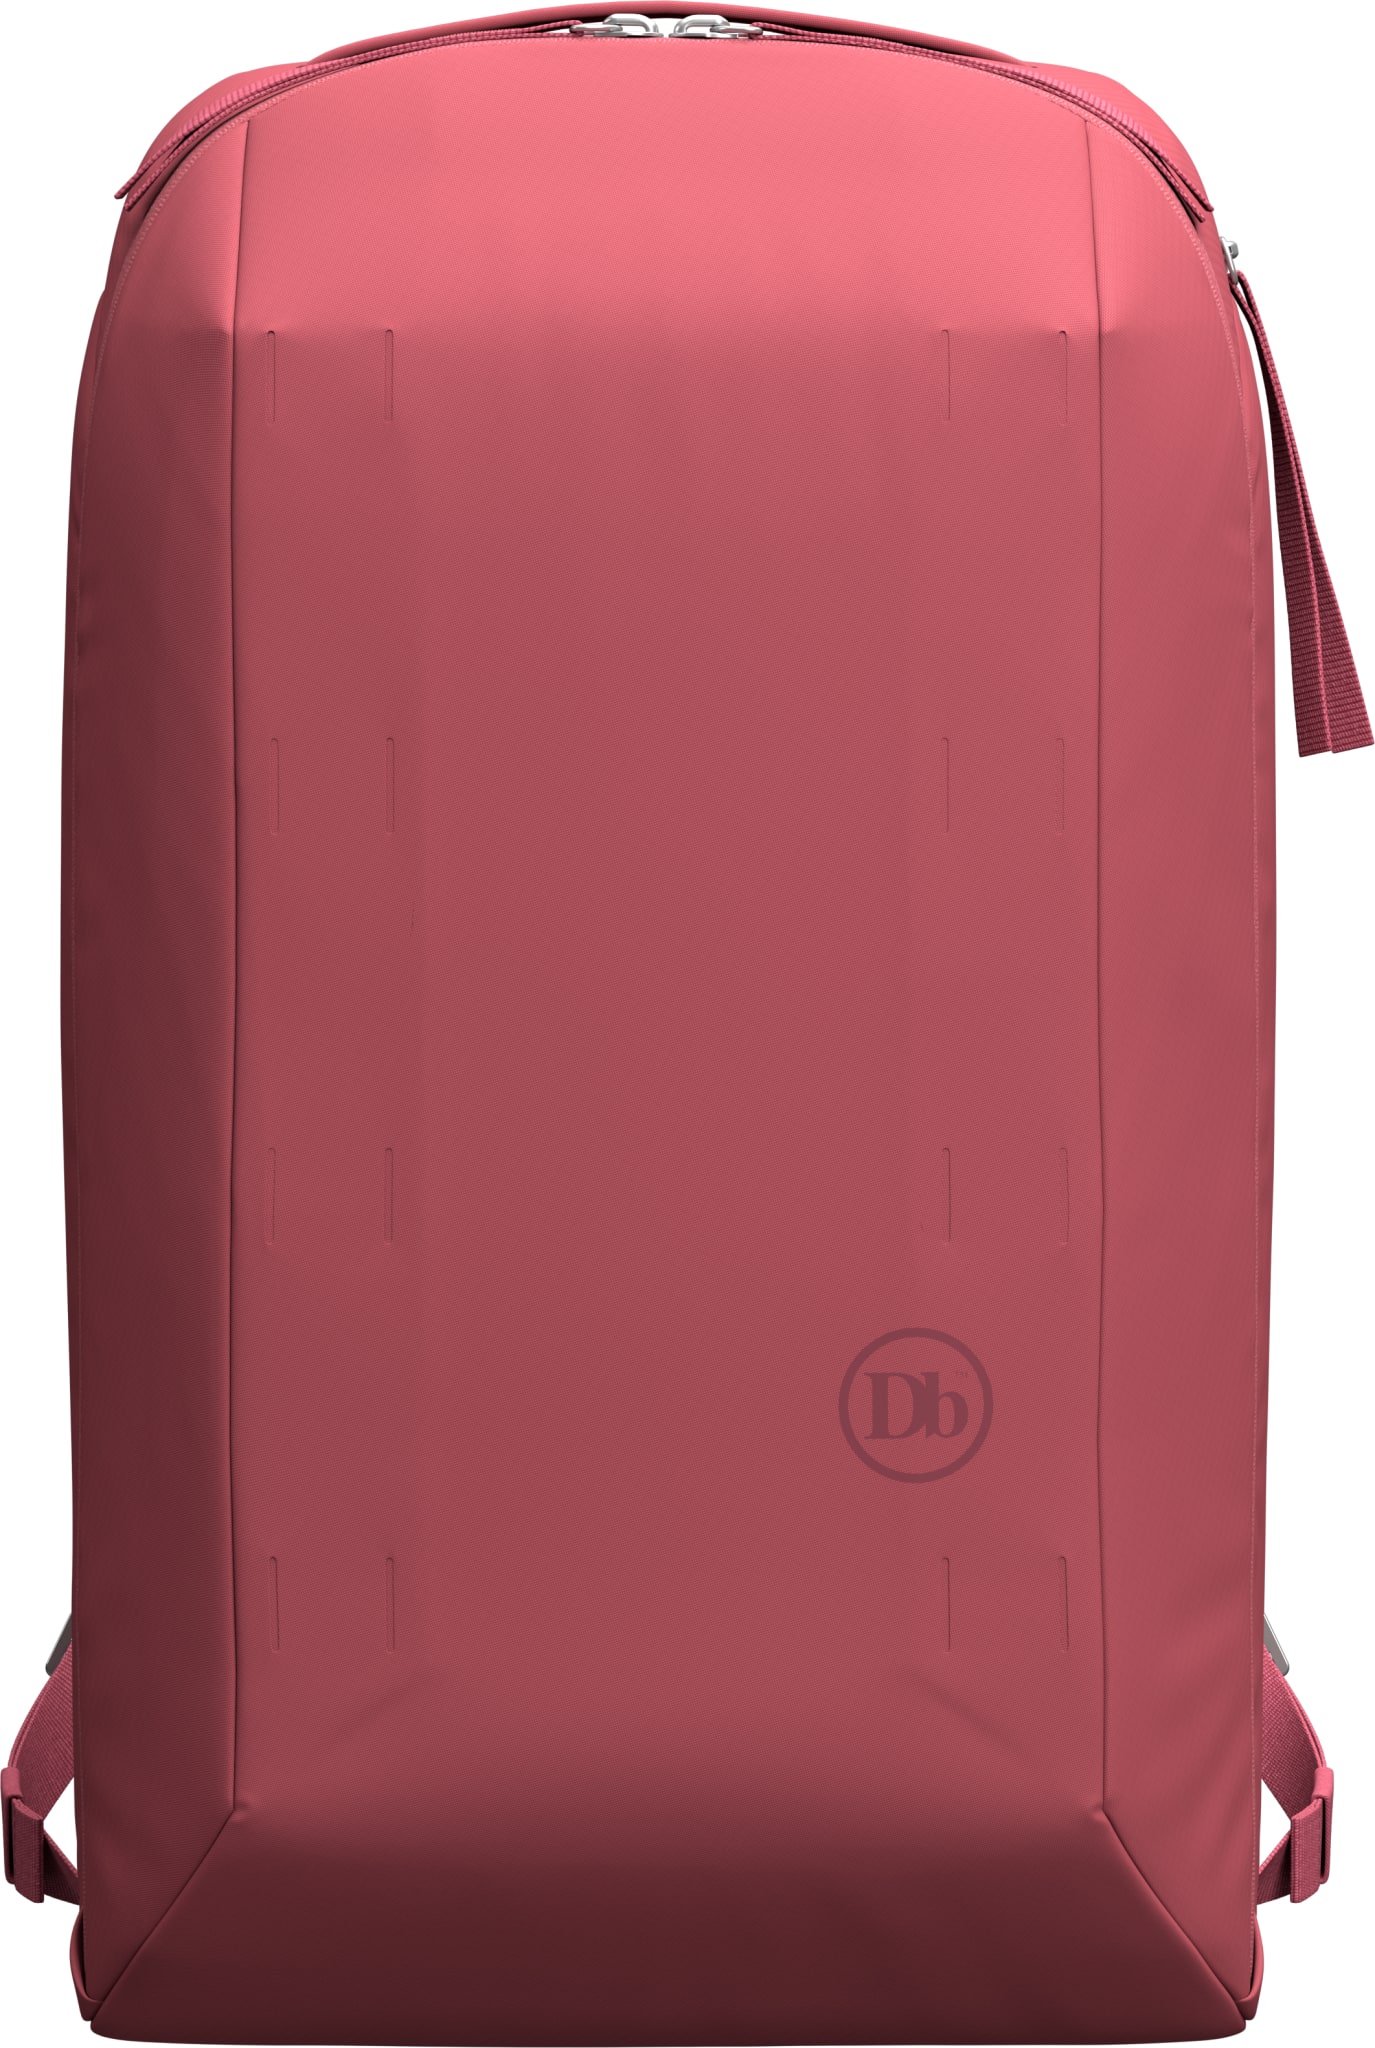 The Makeløs 16L Backpack